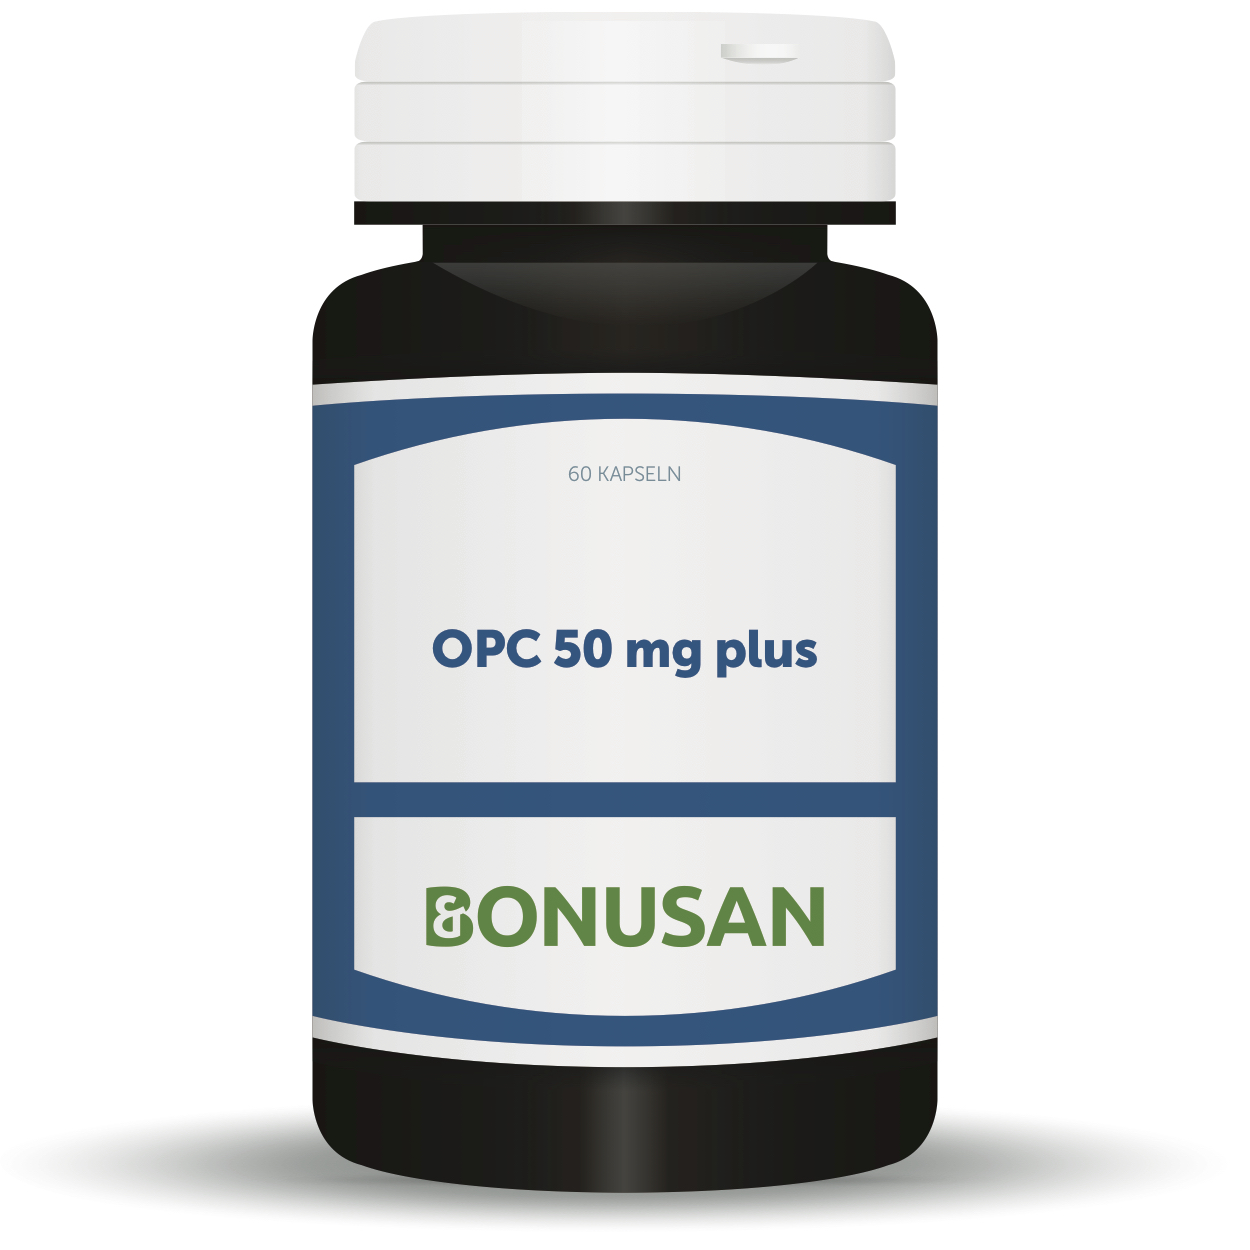 OPC 50 mg plus